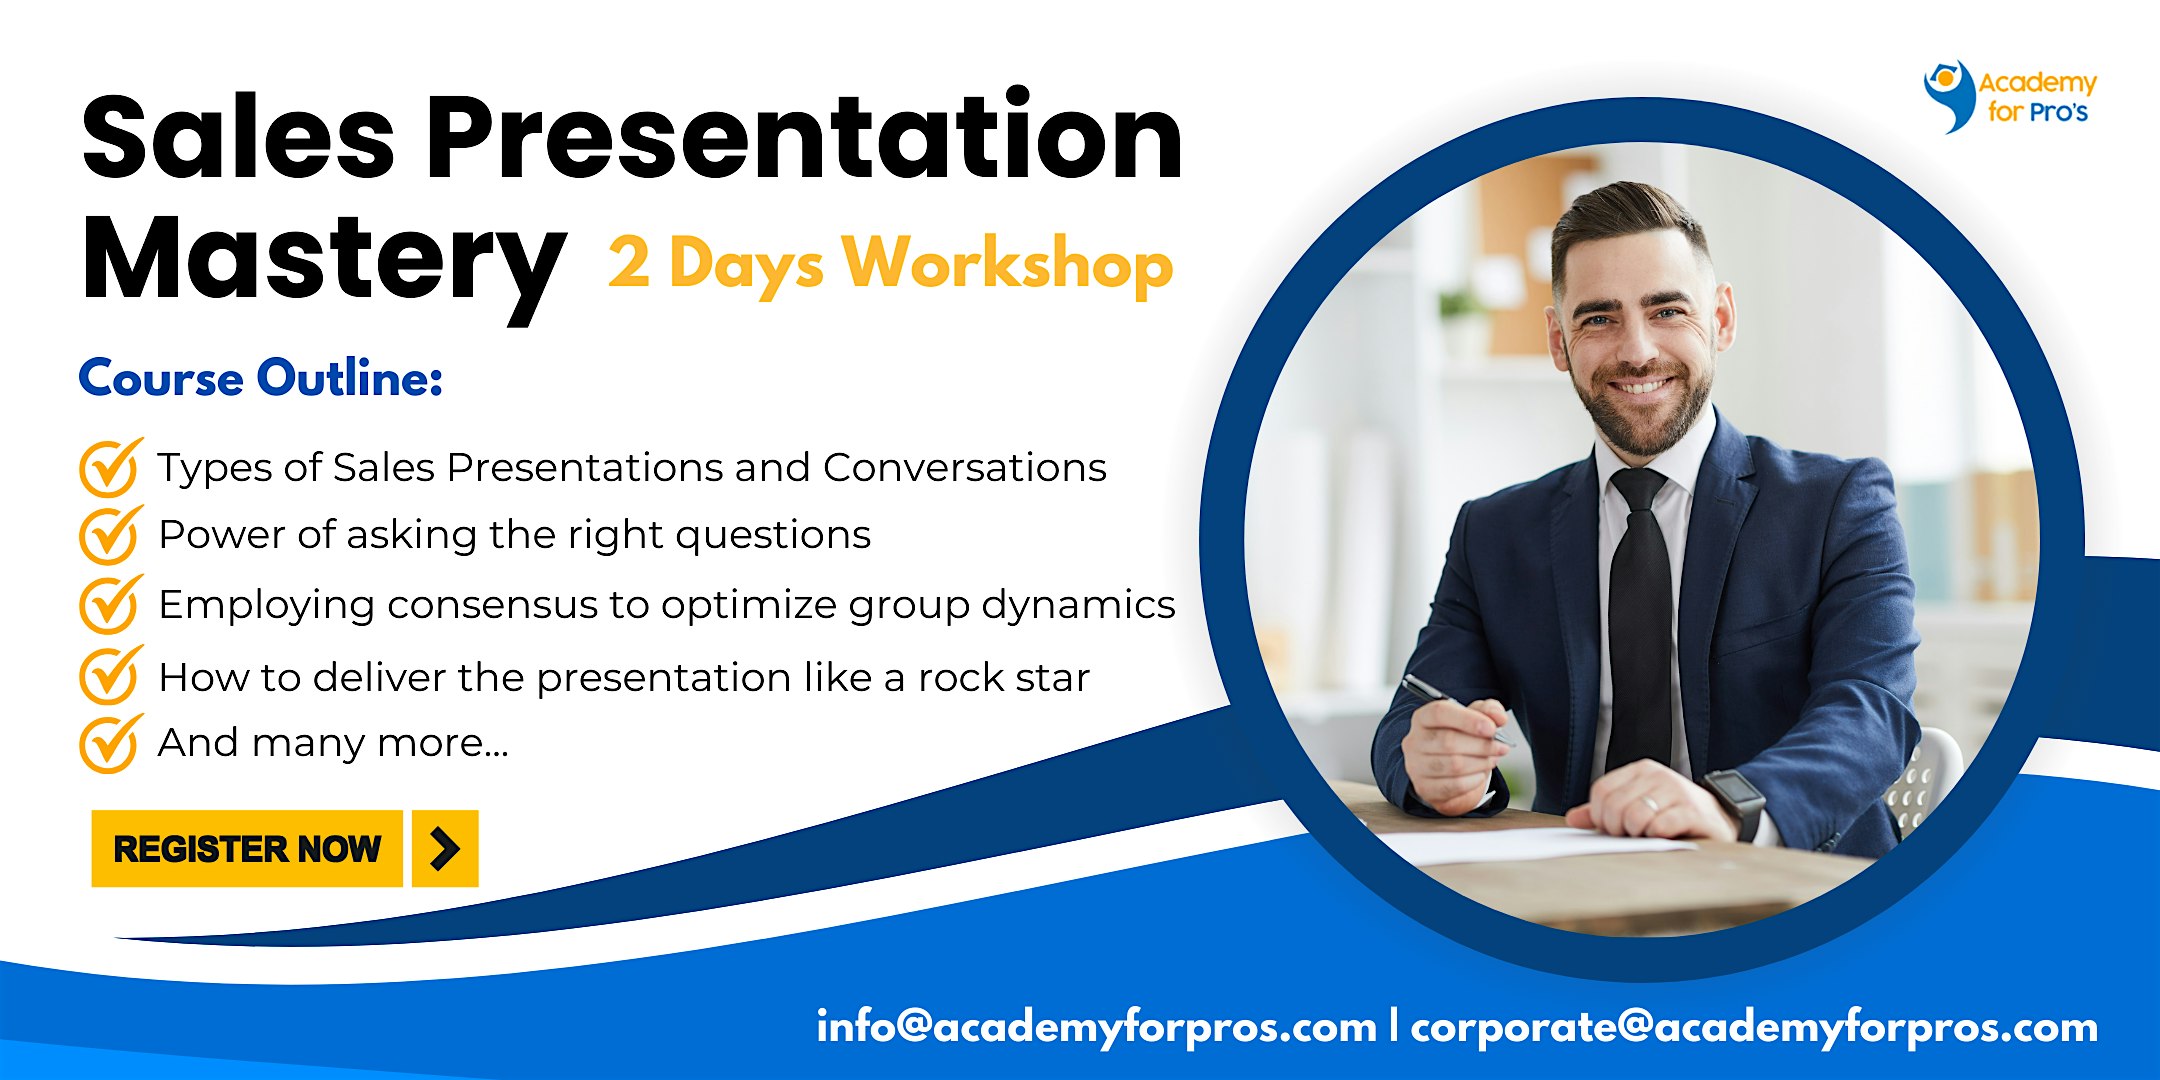 Sales Presentation Mastery 2 Days Workshop in Santa Maria, CA